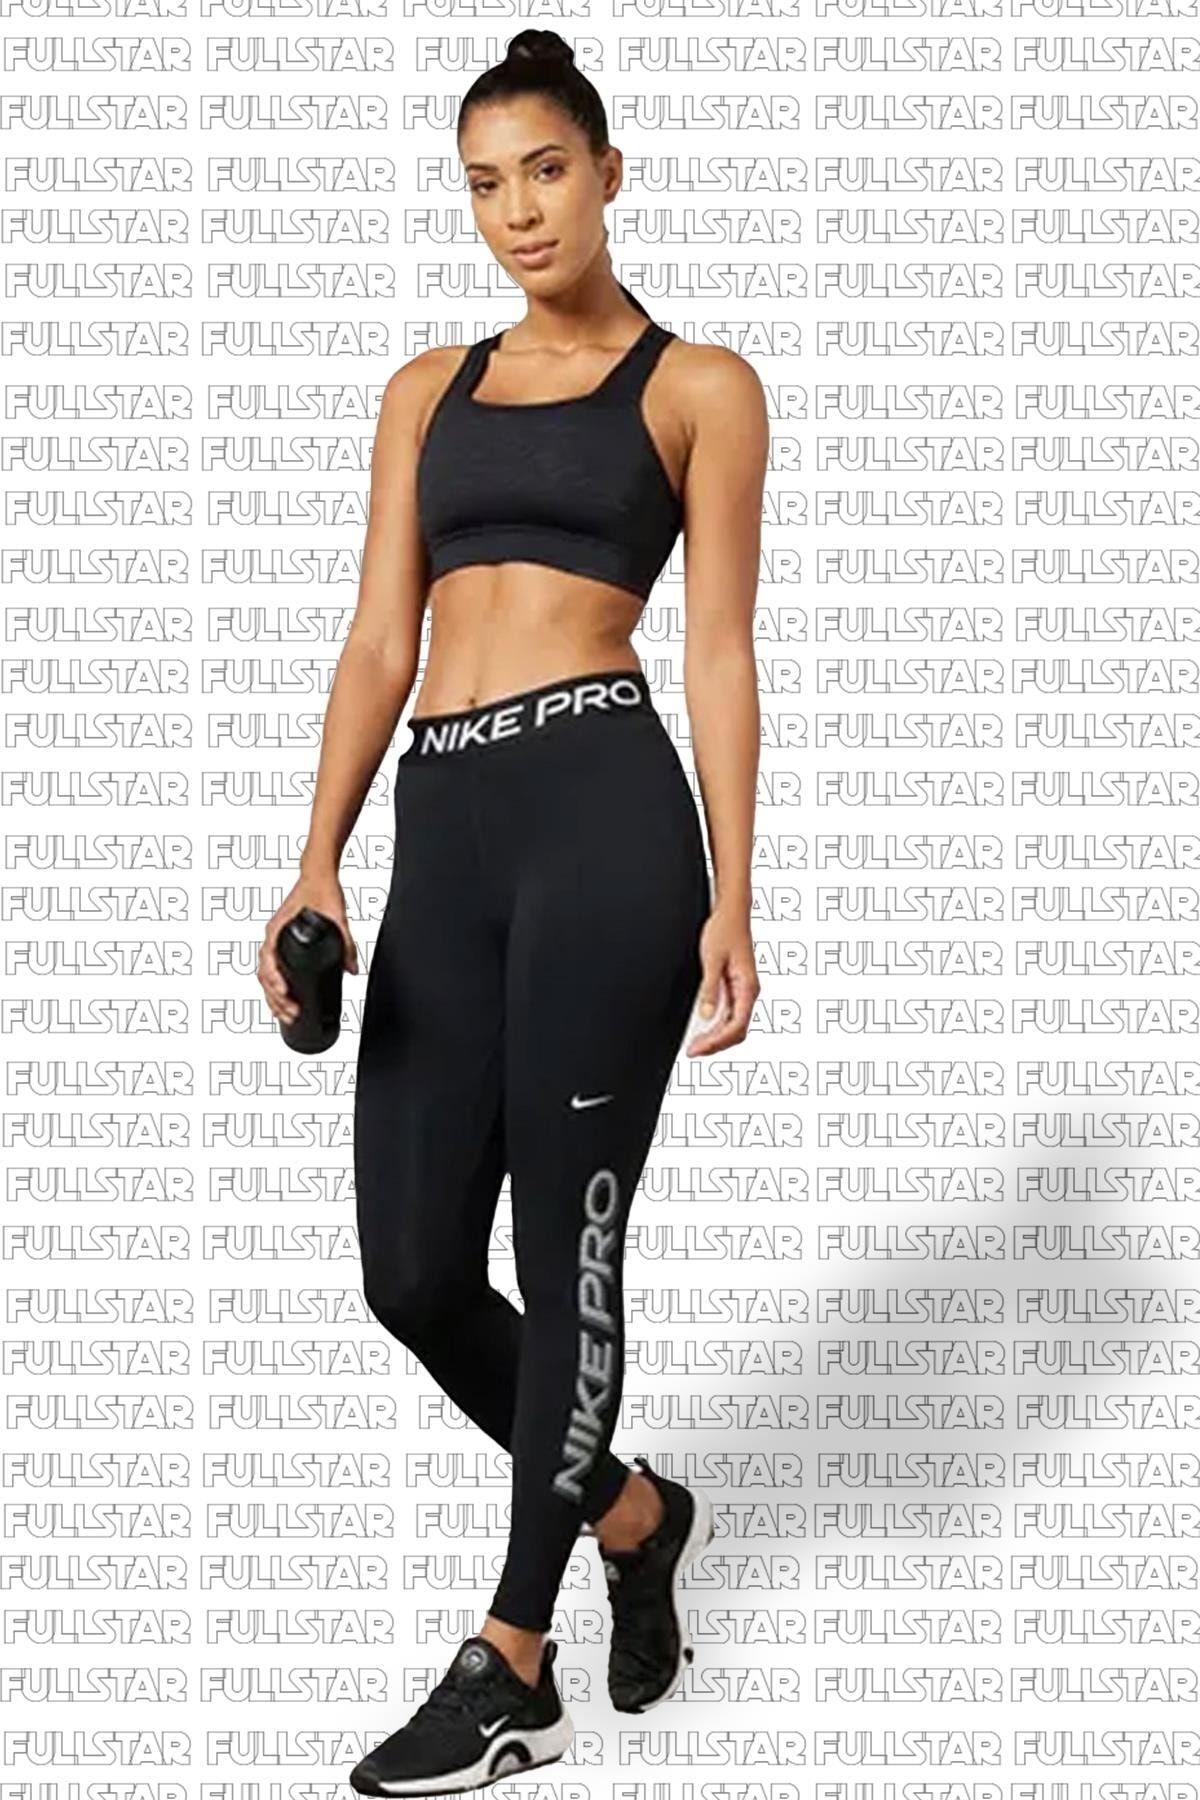 Nike Pro Dri-FIT Femme 7/8 Tight Women